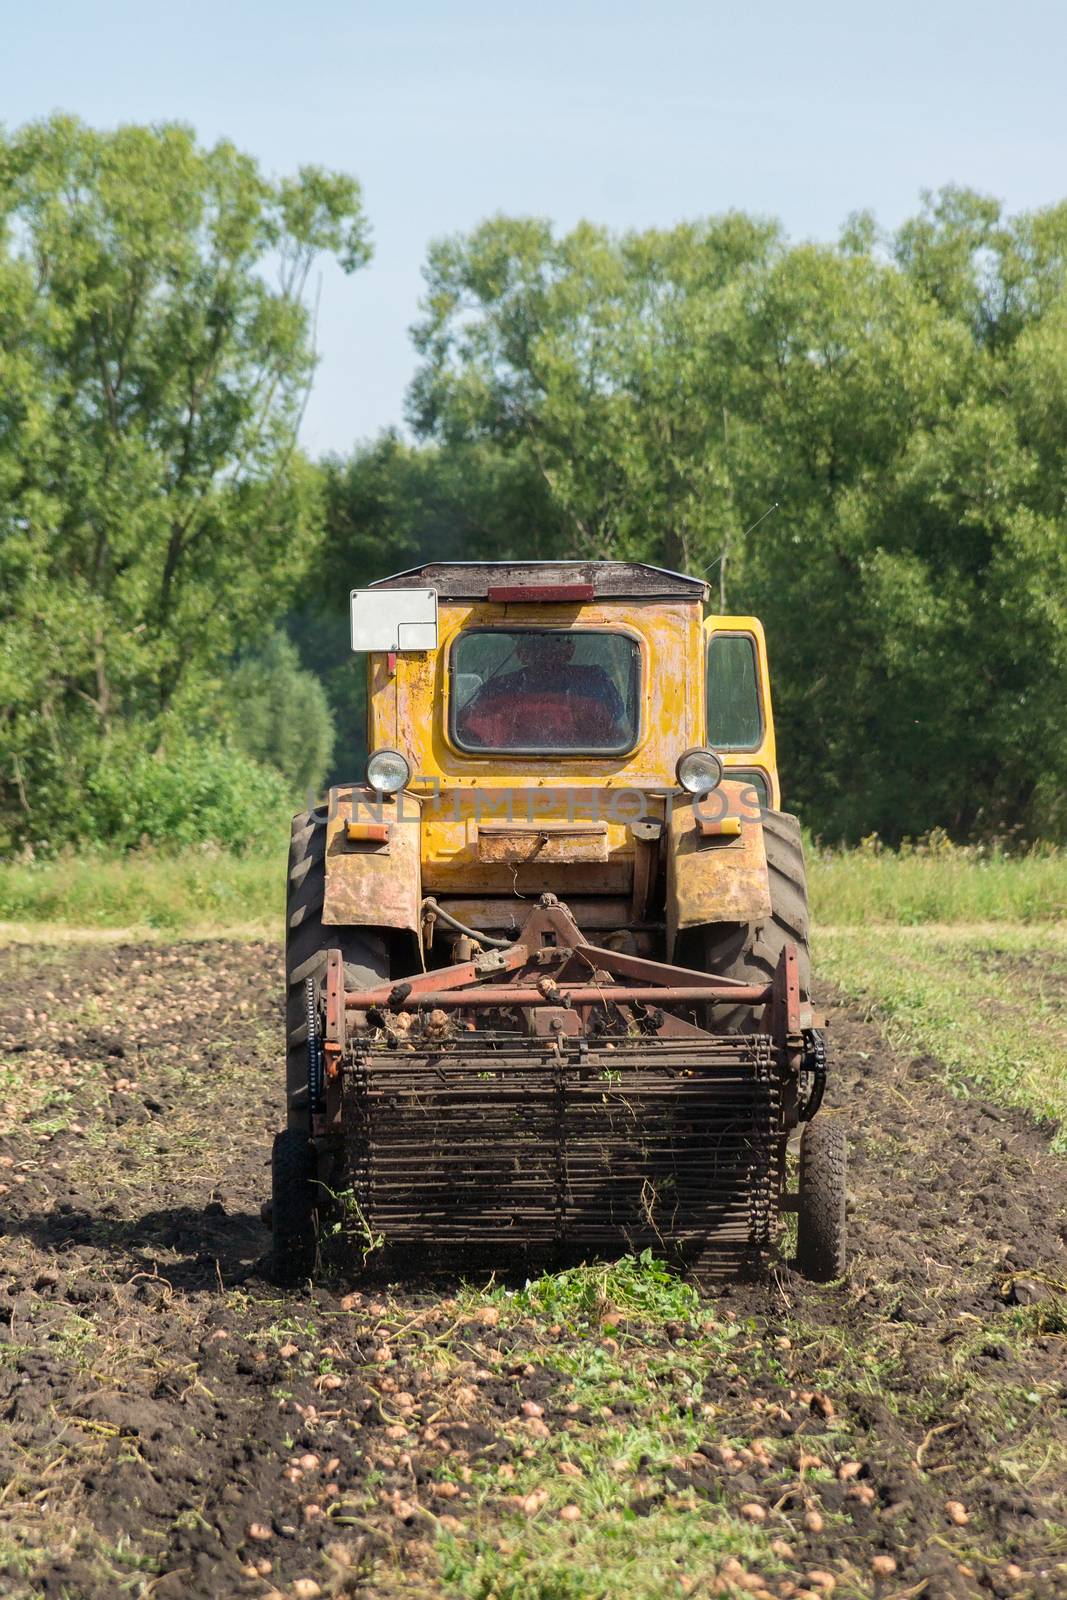 tractor digging potatoes by AlexBush